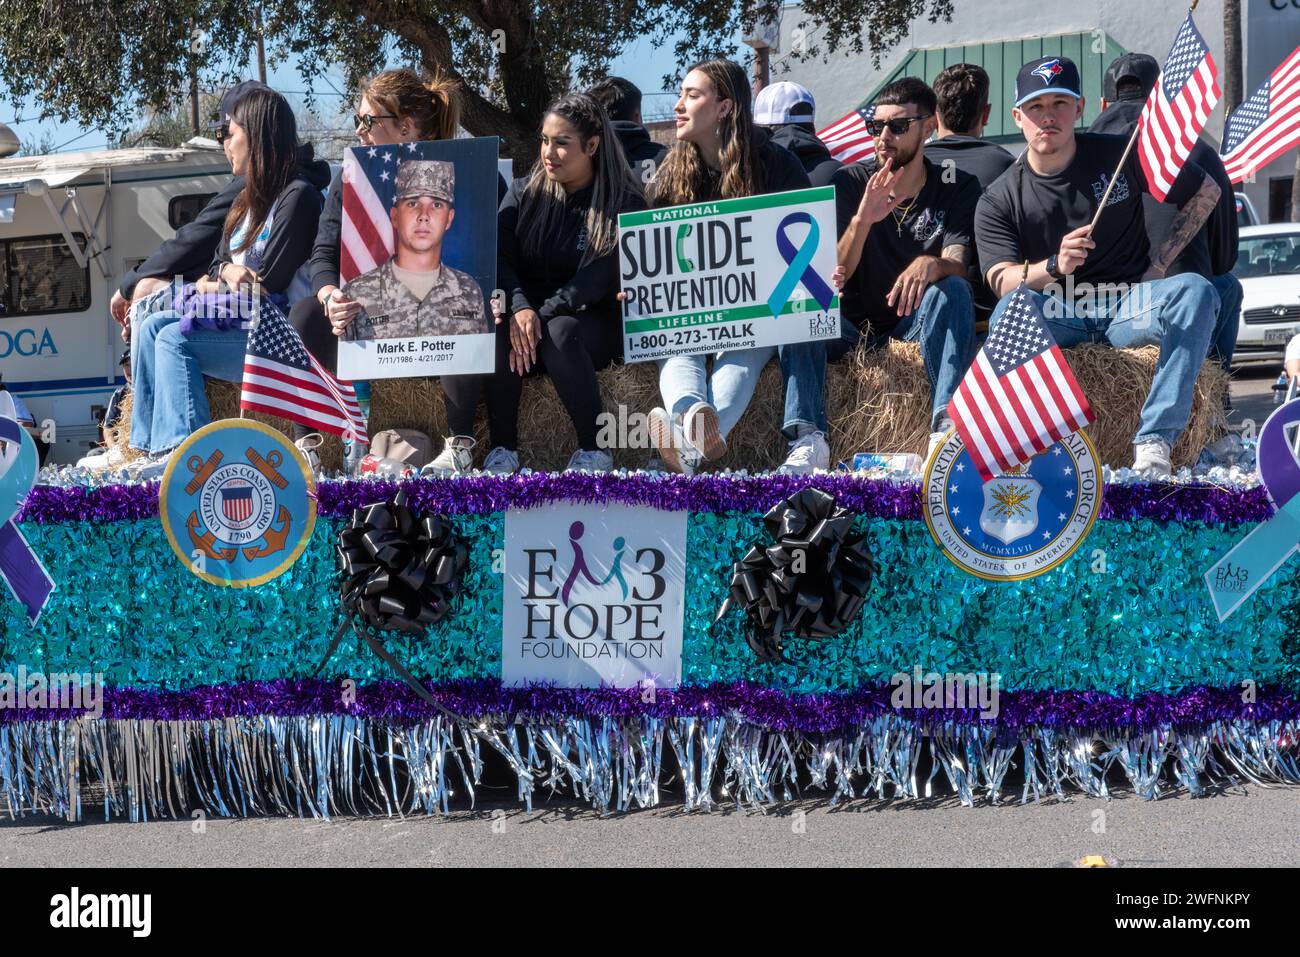 Türkisfarbener Paradewagen mit US-Flaggen zur Selbstmordprävention EM3 Hope, 92. Jährliche Texas Citrus Fiesta Parade of Orangen, Mission TX USA. Stockfoto